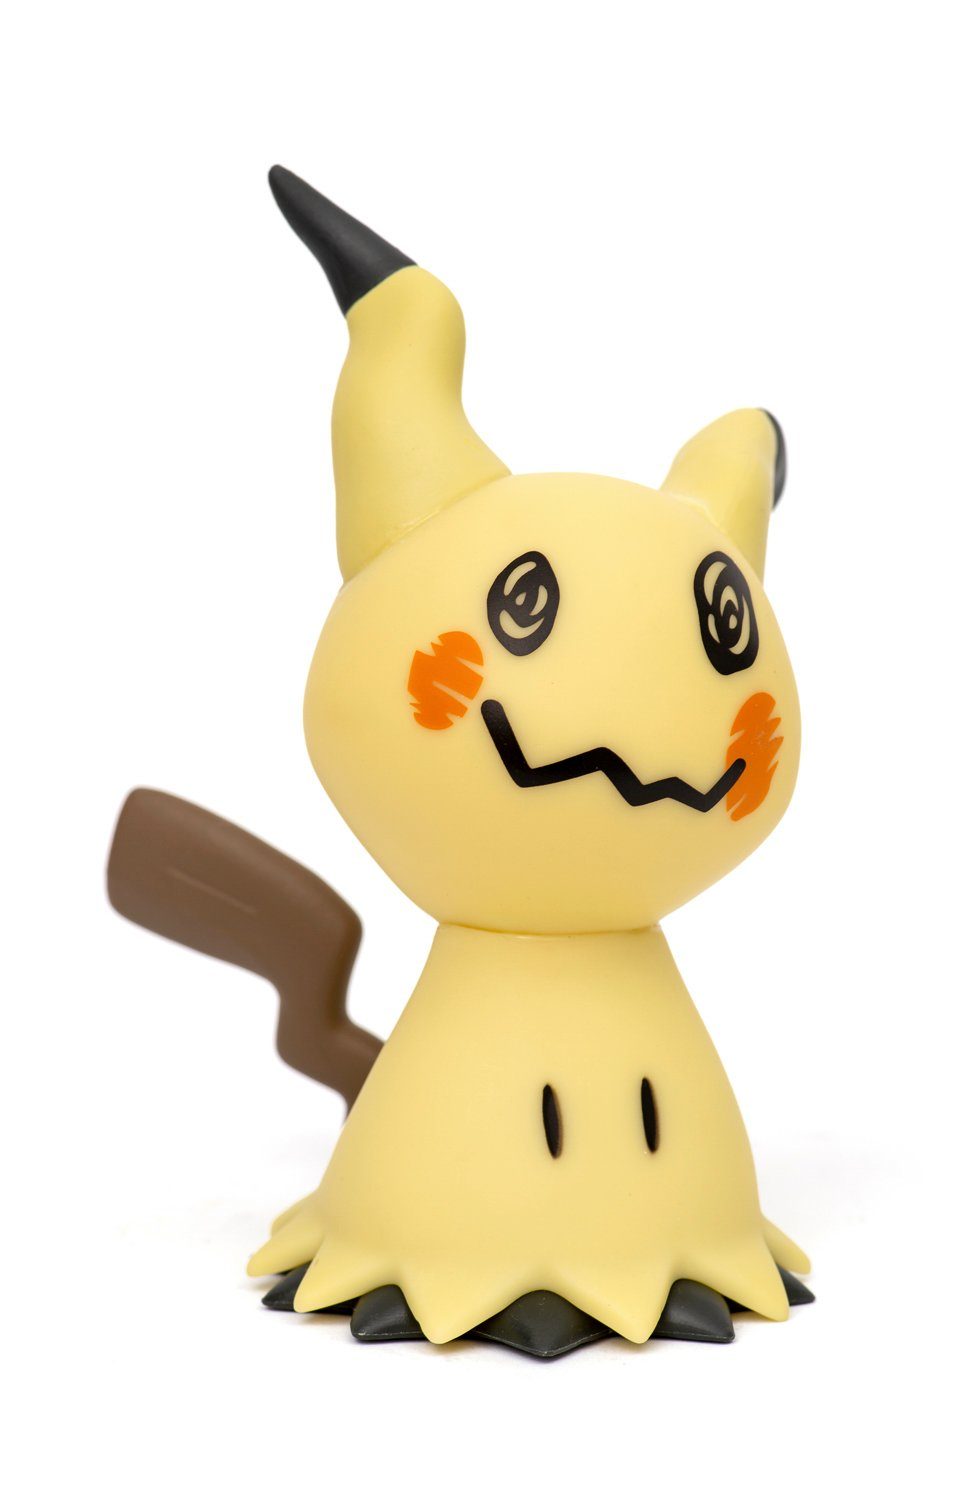 Vinyl Figur Merchandise-Figur Jazwares - cm, Pokémon 10 - Mimigma (1-tlg)